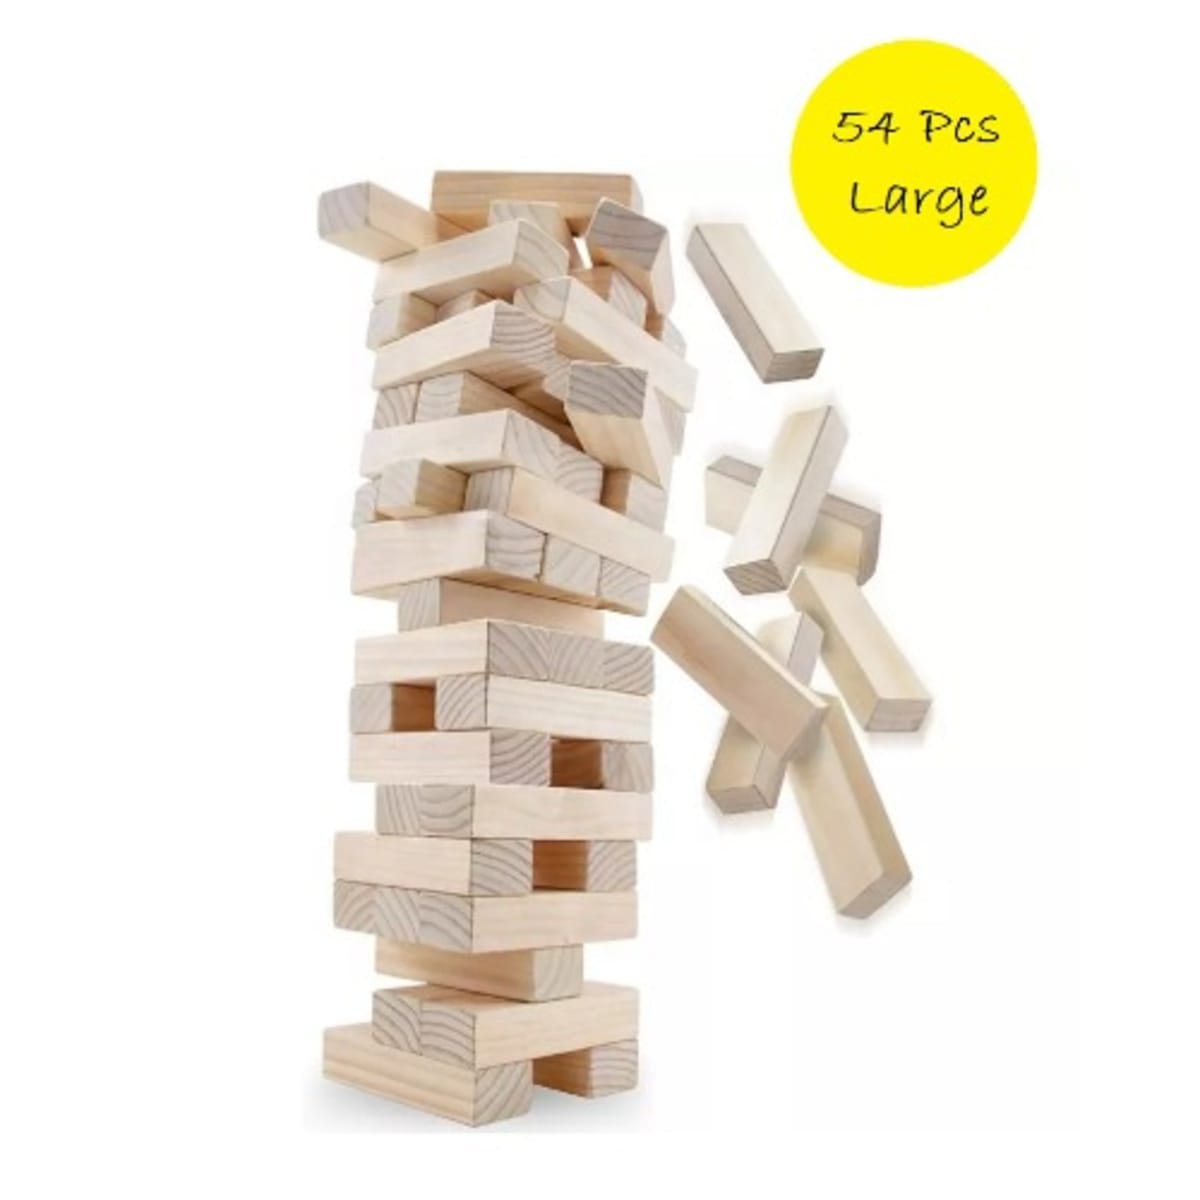 Jenga Wood Game For Adult And Kids - Large -54pcs